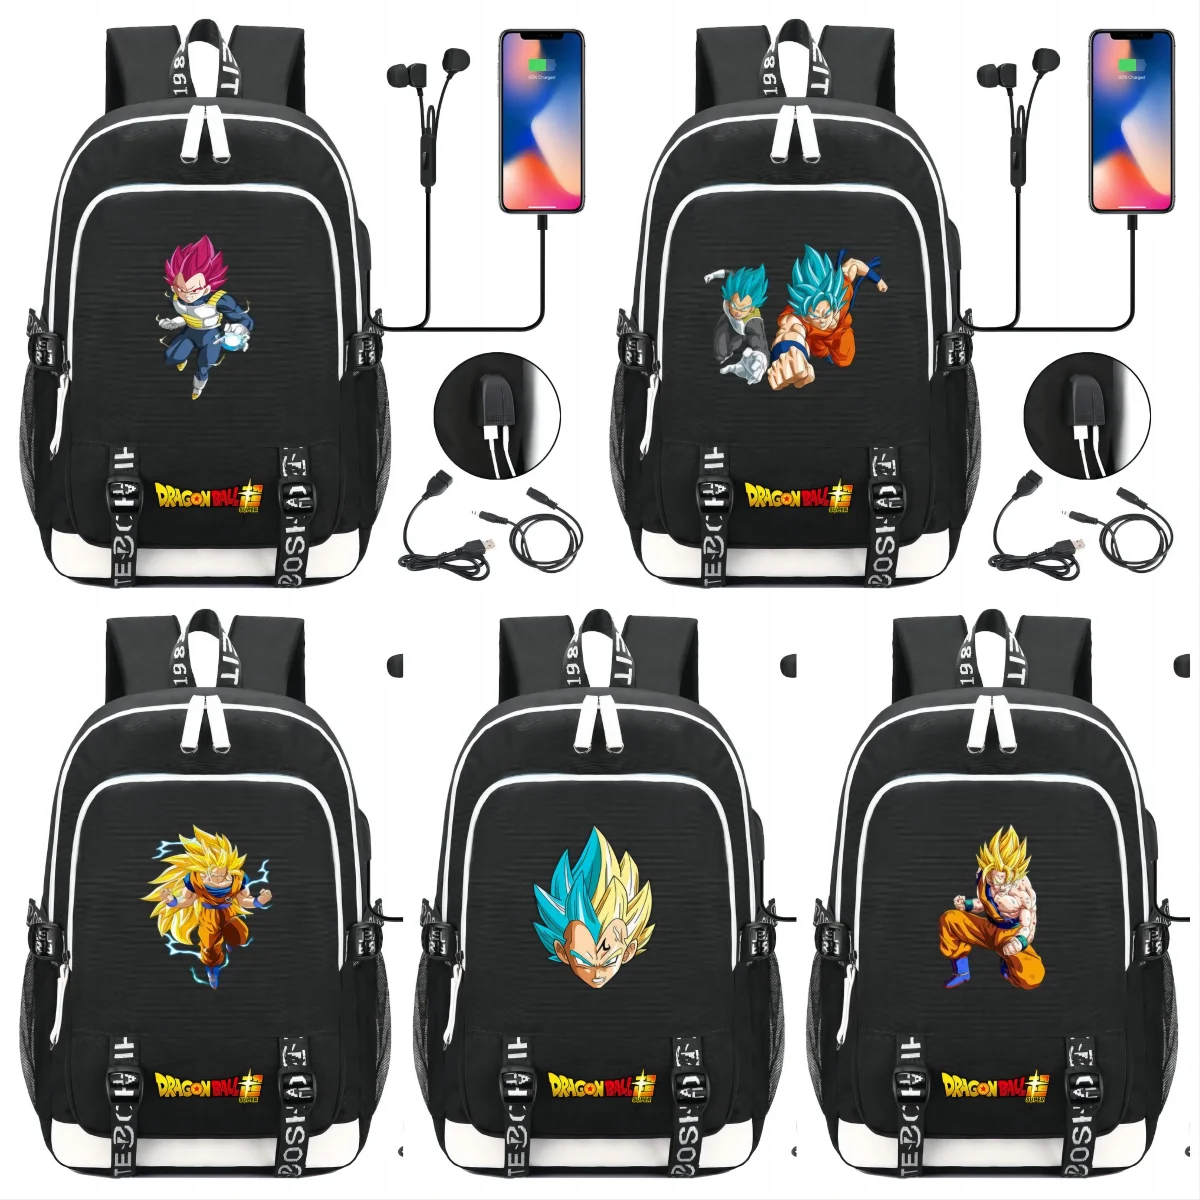 

Dragon Ball Backpack Cartoon Printed School Bag Anime Son Goku Knapsack Boy Student Rucksack Kids High Capacity Schoolbag Gift